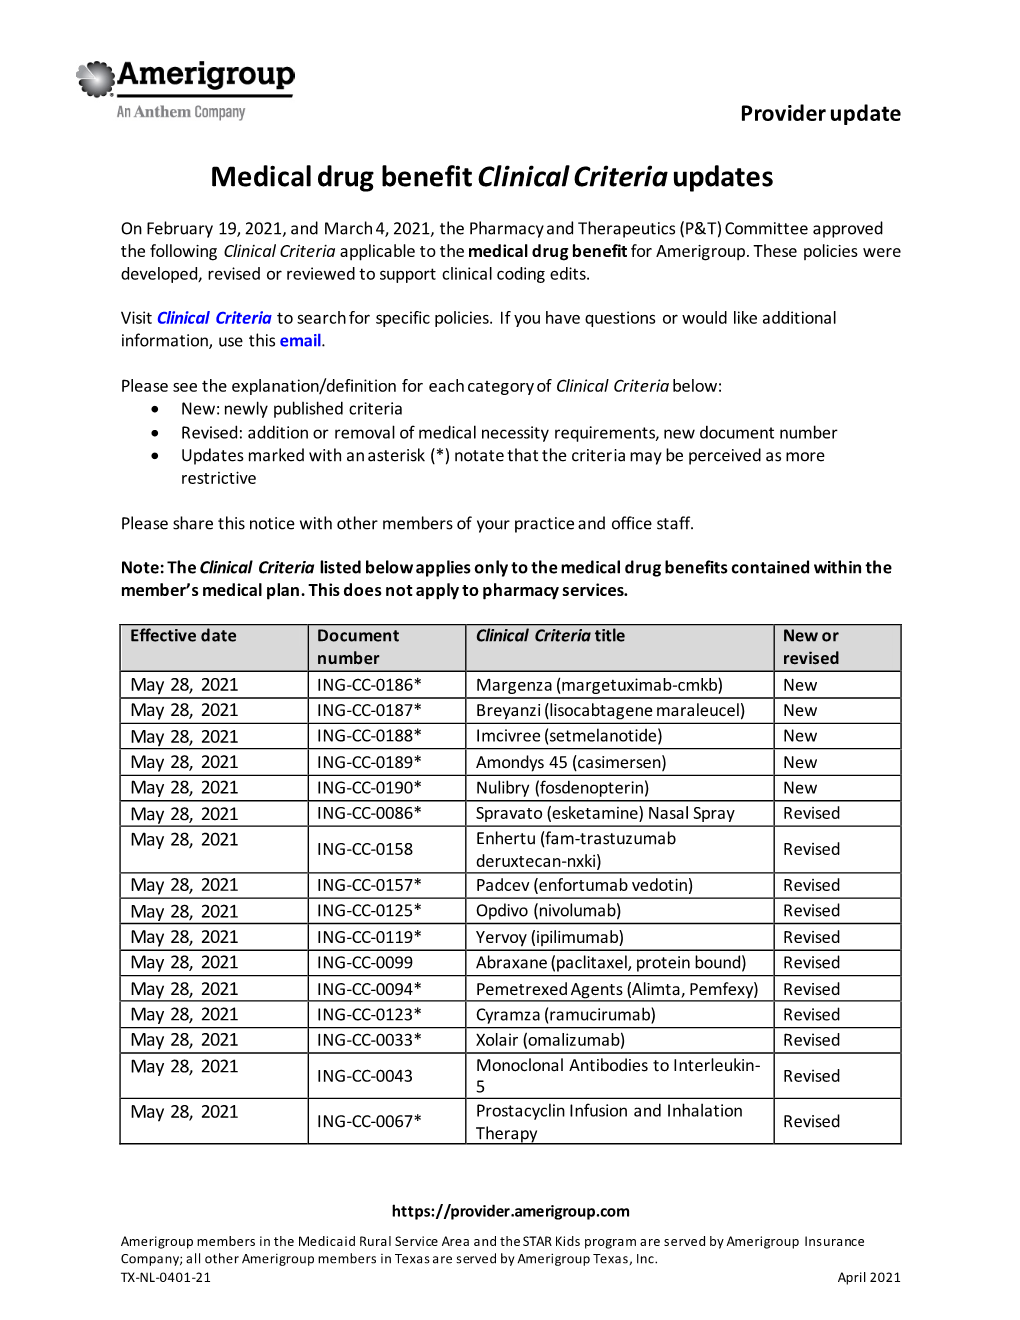 Medical Drug Benefitclinical Criteria Updates